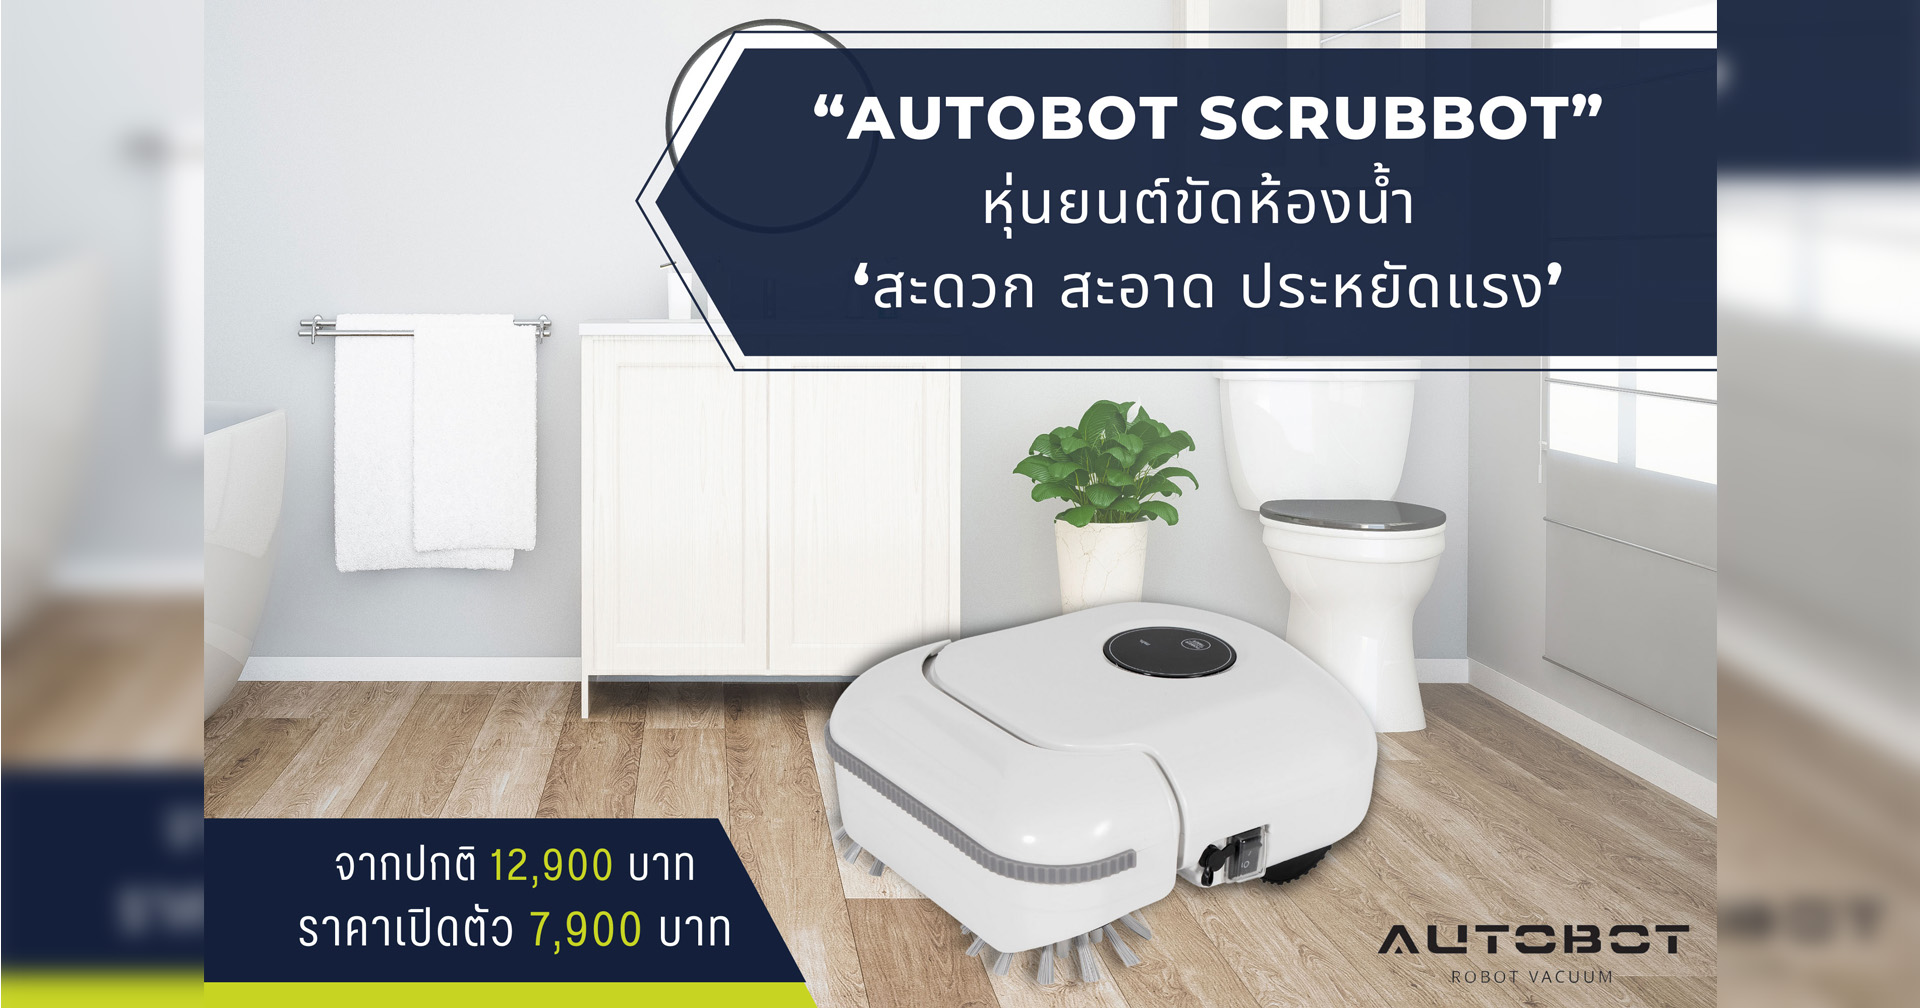 AUTOBOT SCRUBBOT หุ่นยนต์ขัดห้องน้ำ ‘สะดวก สะอาด ประหยัดแรง’